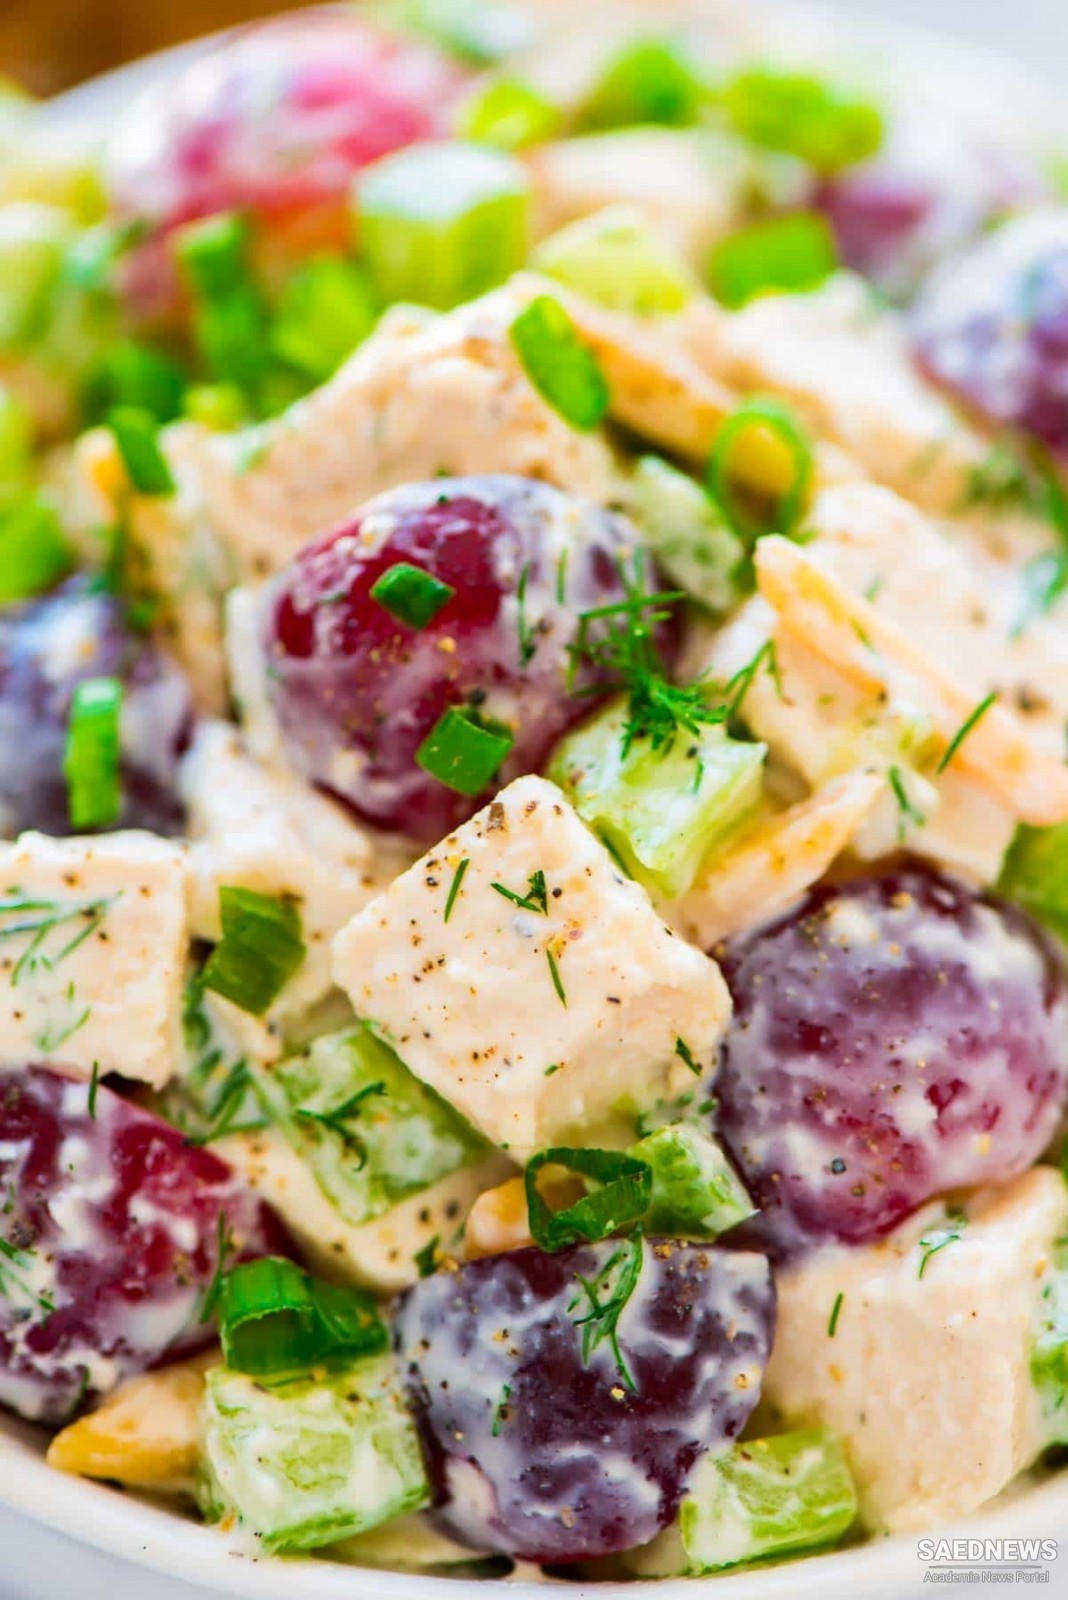 Iranian Salads: Chicken and Grapes Salad